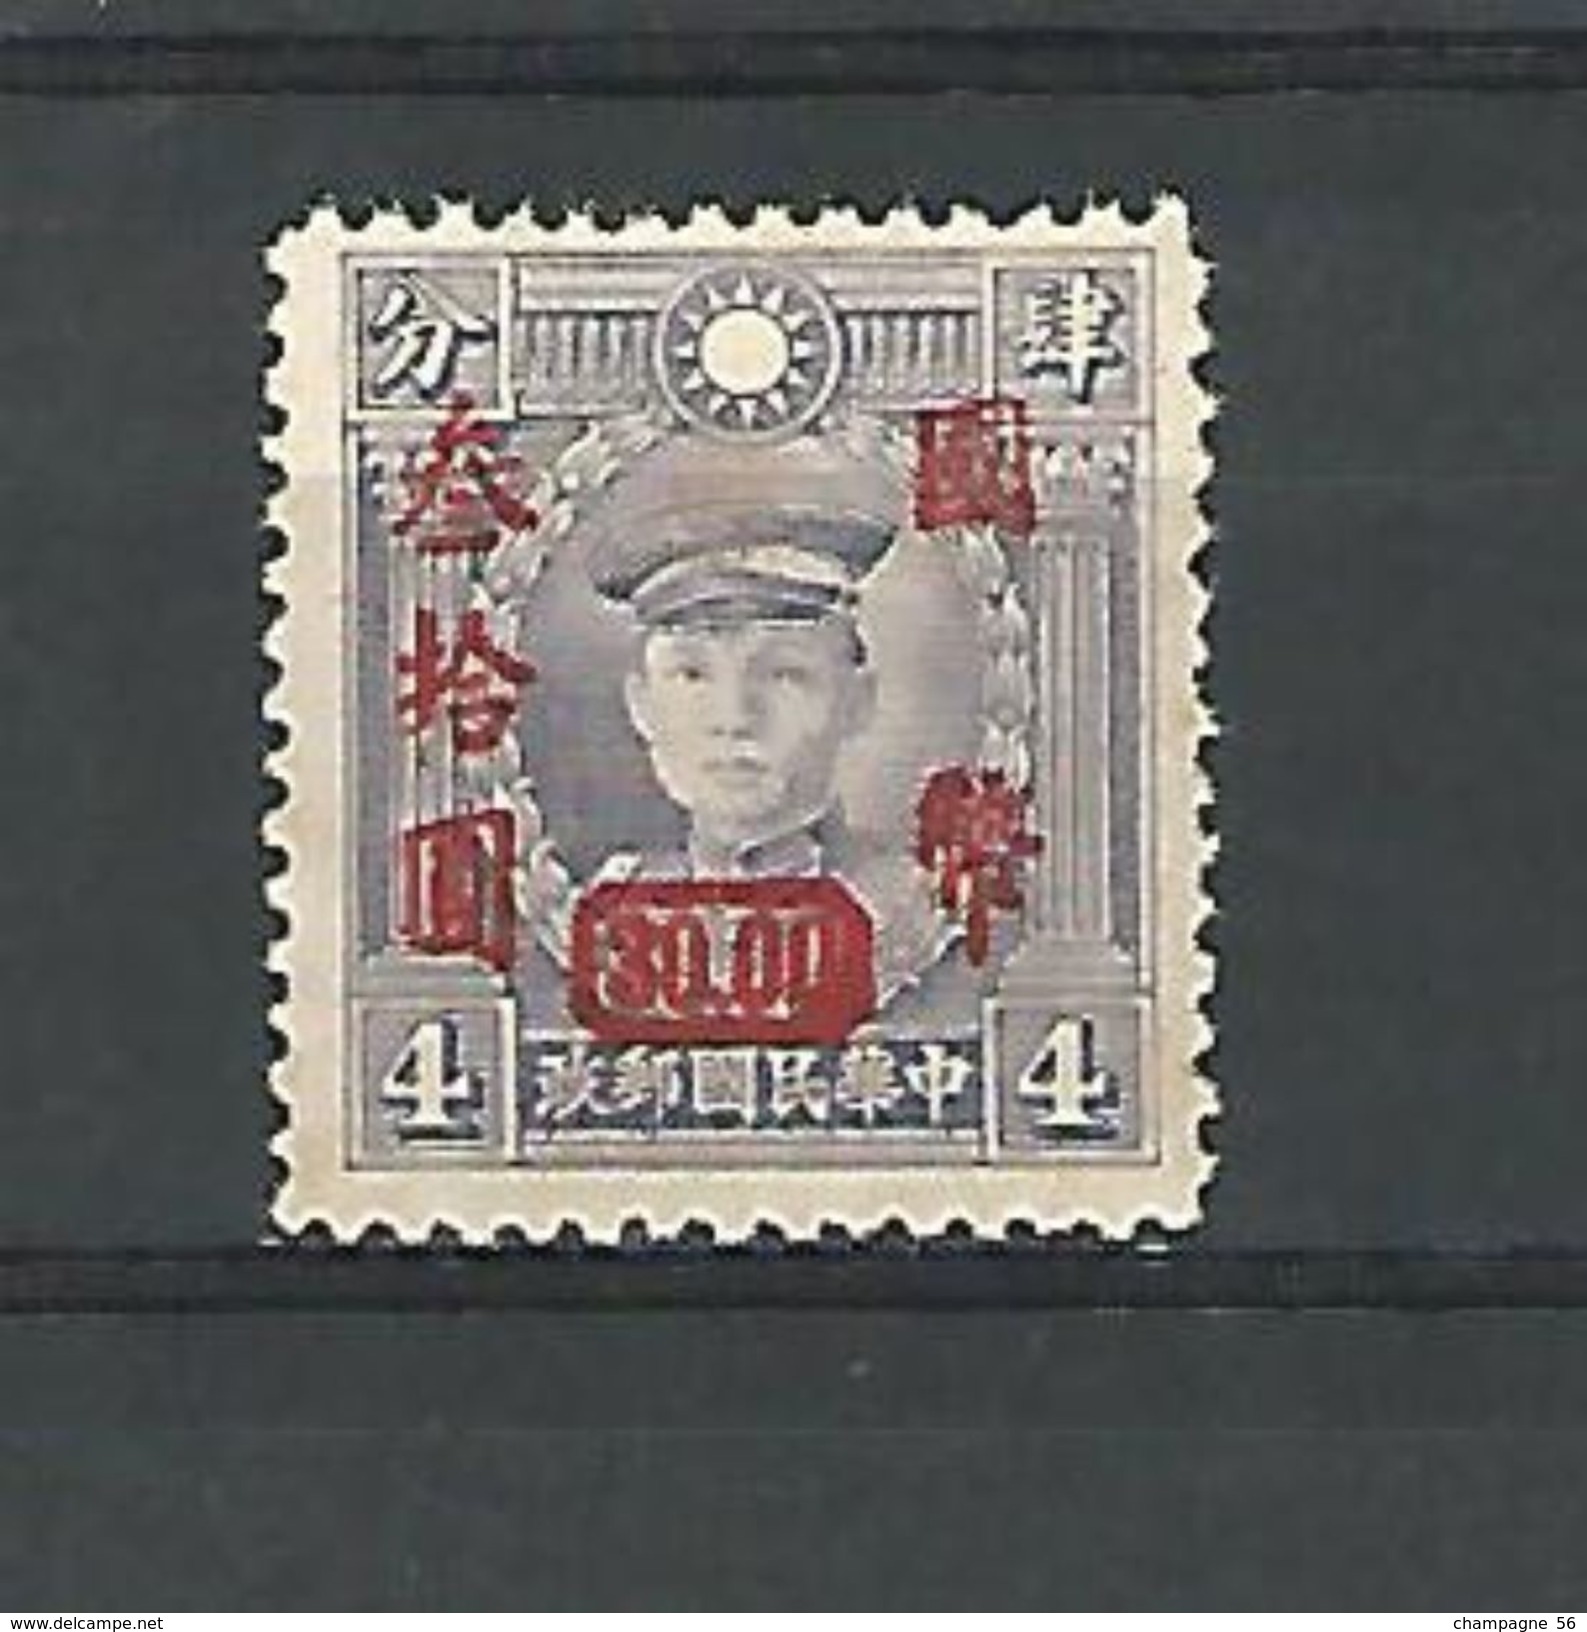 VARIÉTÉS 1945 N° 463  SURCHARGE 30.00 ROUGE 4  EMPEREUR HIROHITO NEUFS  GOMME - Central China 1948-49